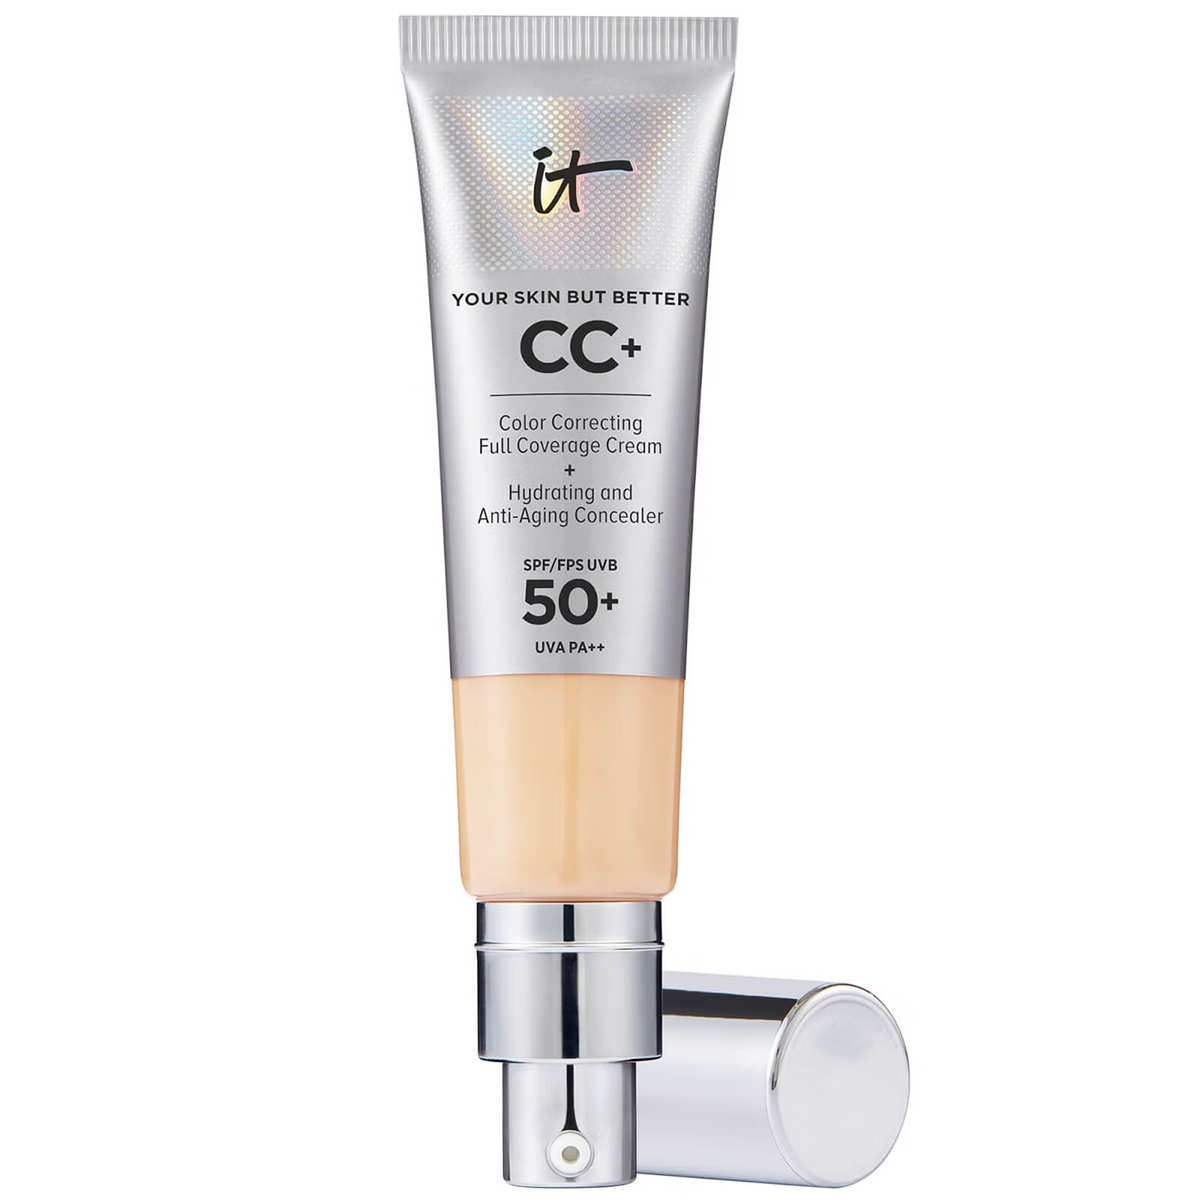  Your Skin But Better CC+ Cream with SPF50 32ml de IT Cosmetics  35,45 euros copia